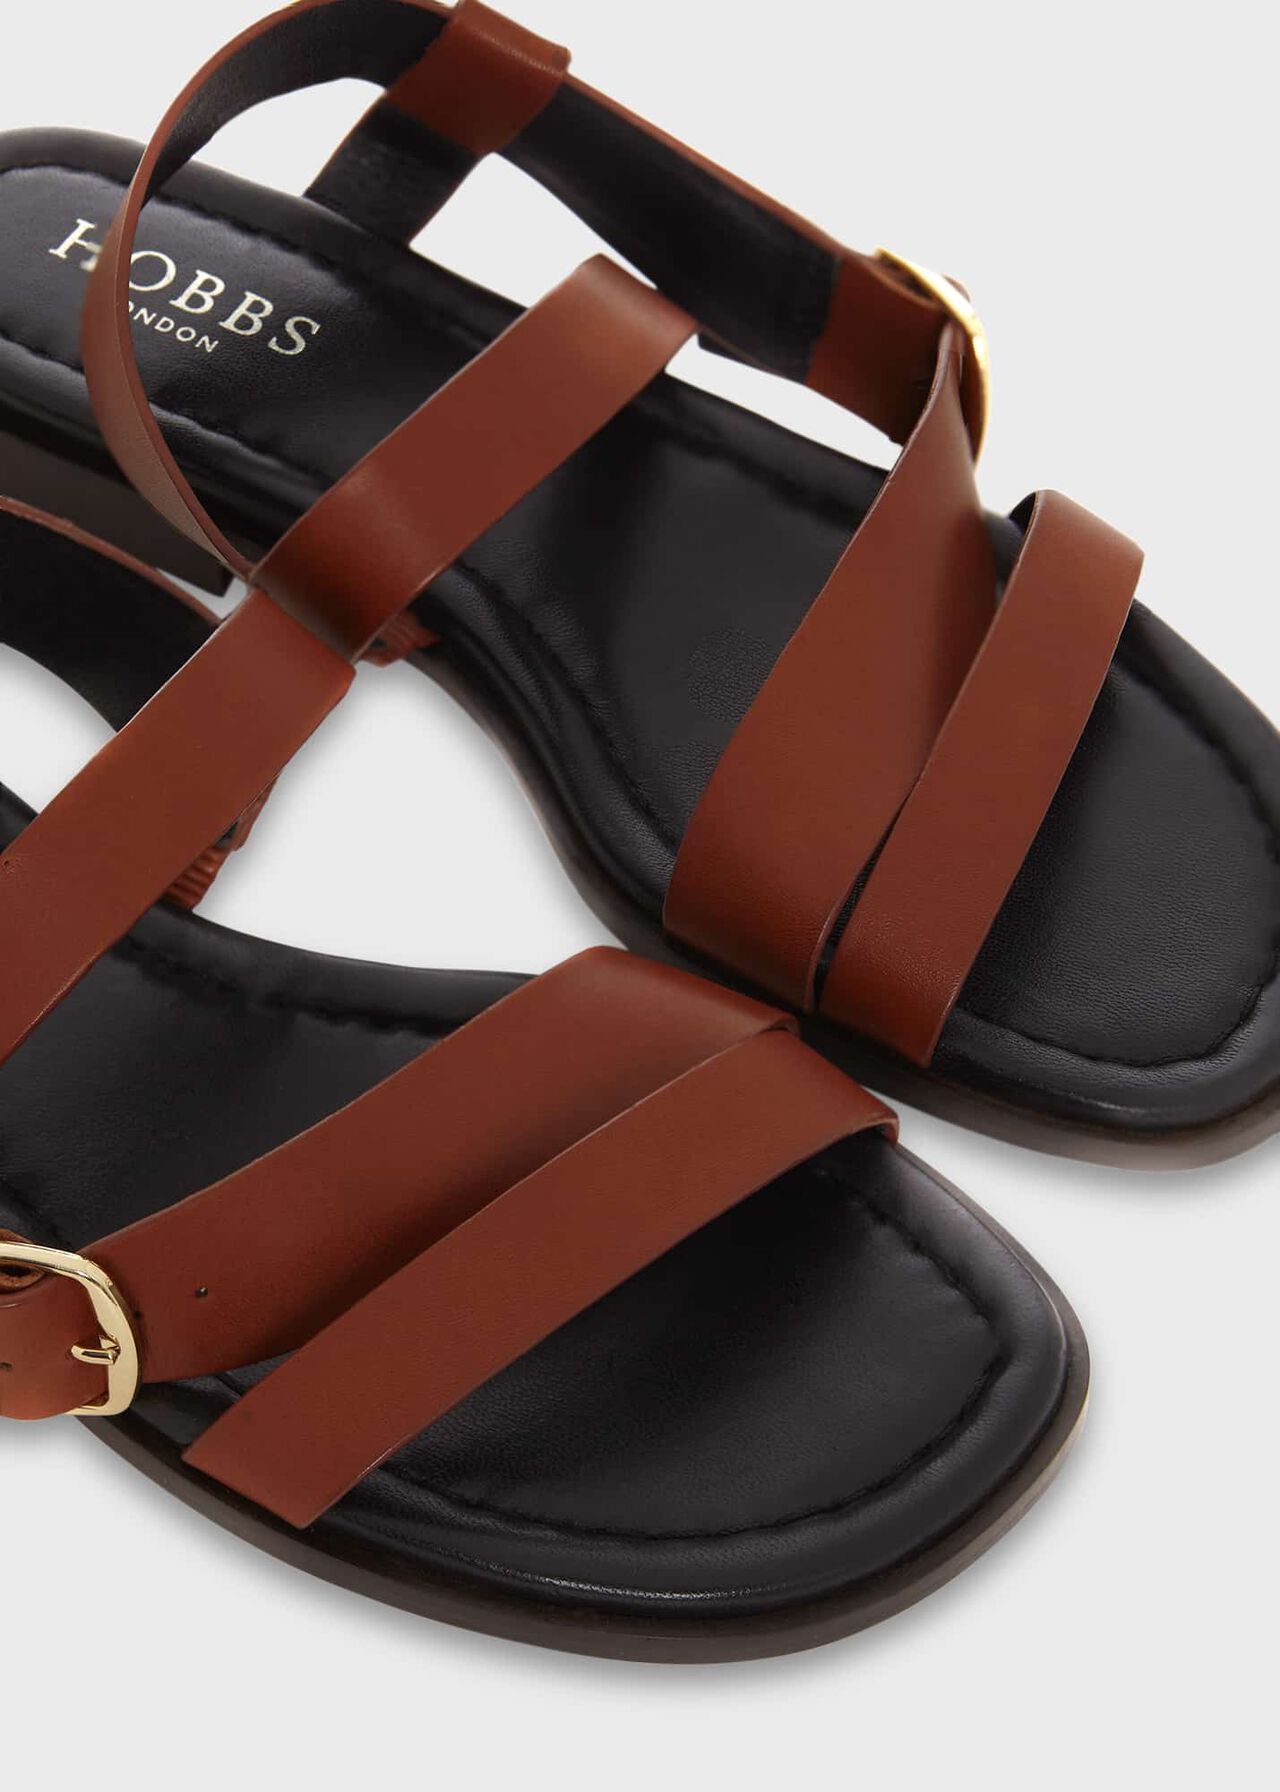 Brooke Leather Sandals, Tan, hi-res